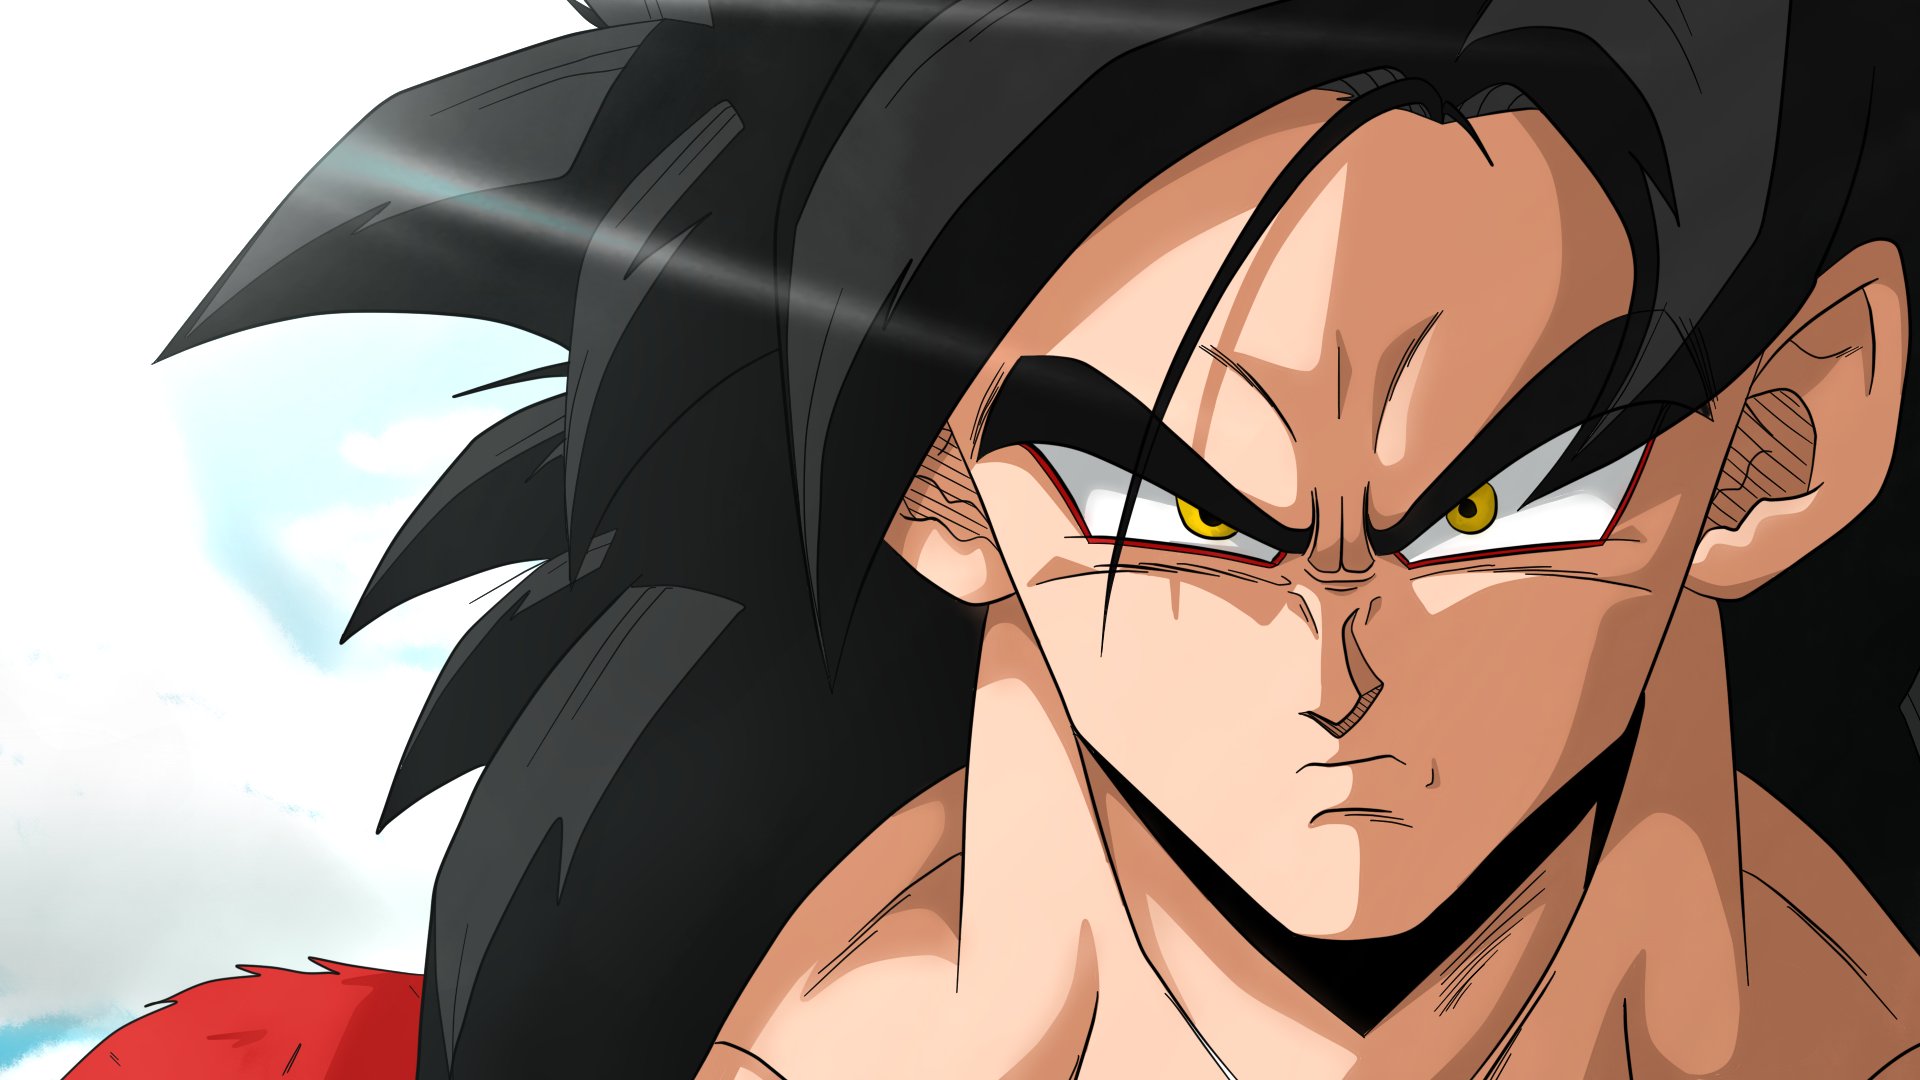 CodyCT (トリオデクラウト) Dragon Ball Super Heroes ssj4 Goku redraw